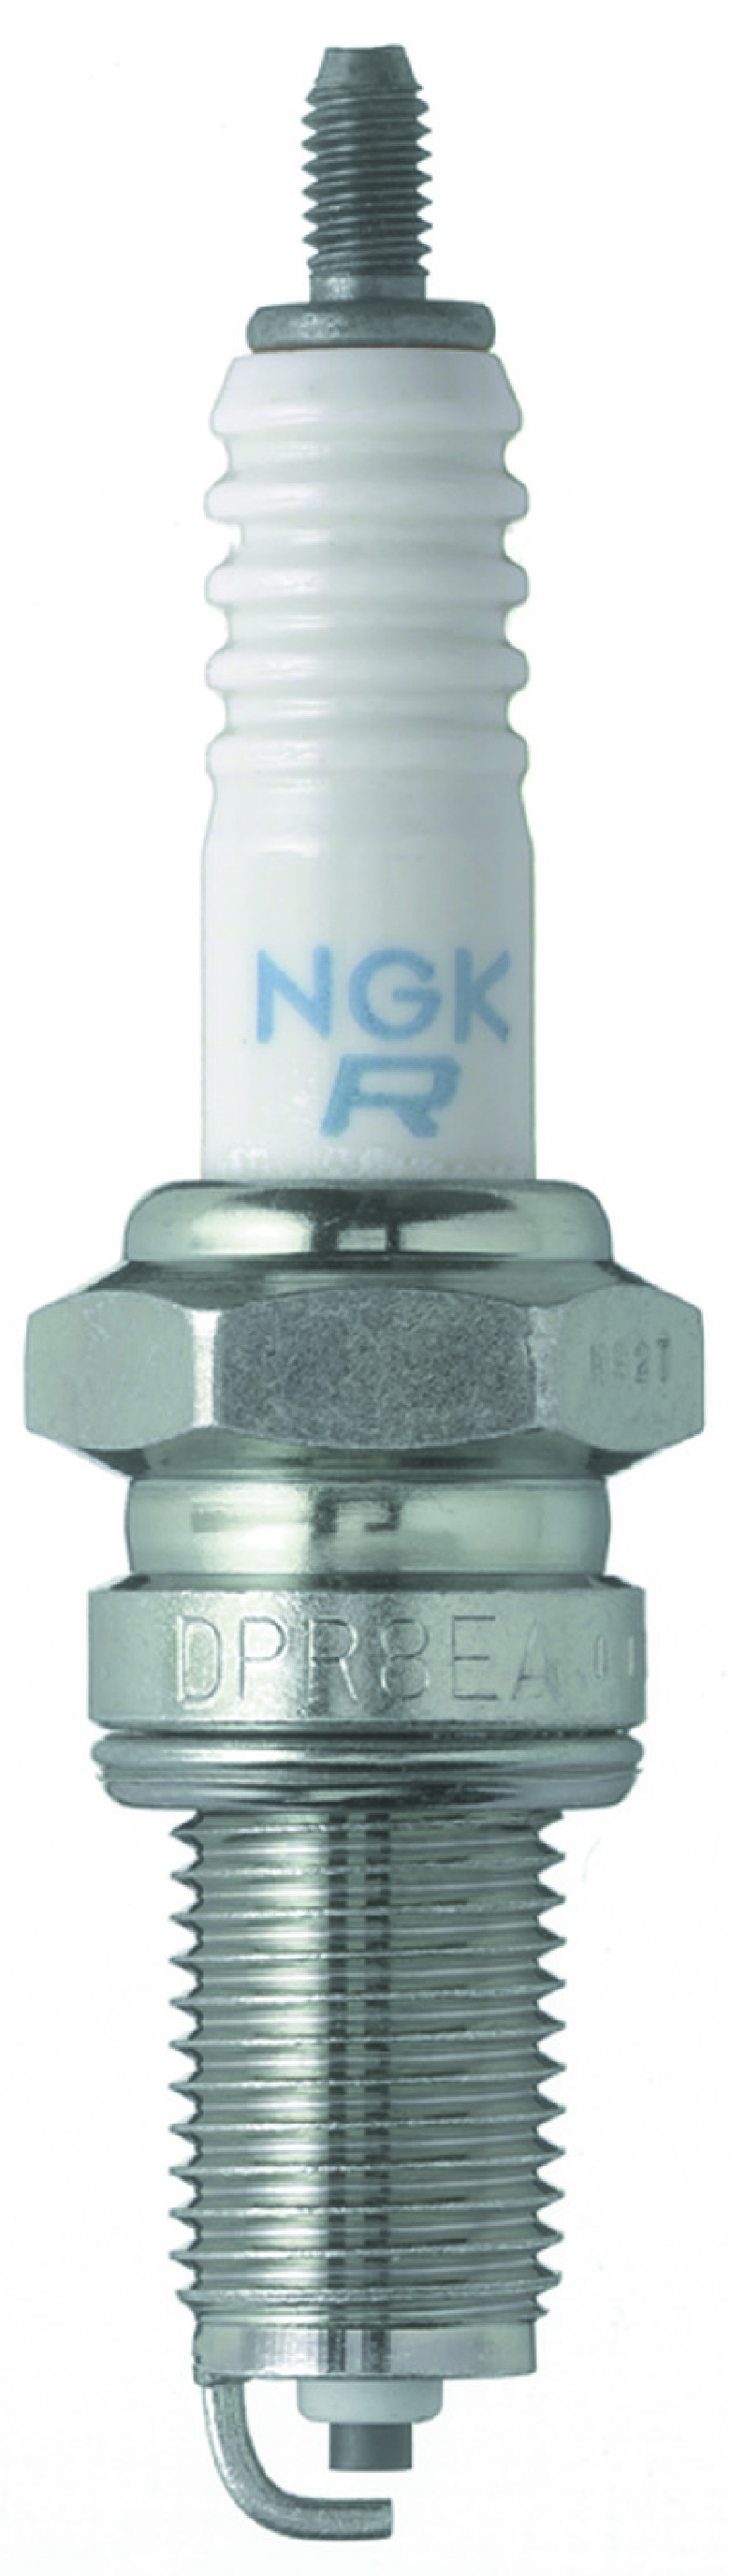 NGK BLYB Spark Plug Box of 6 (DPR8EA-9) - 97768